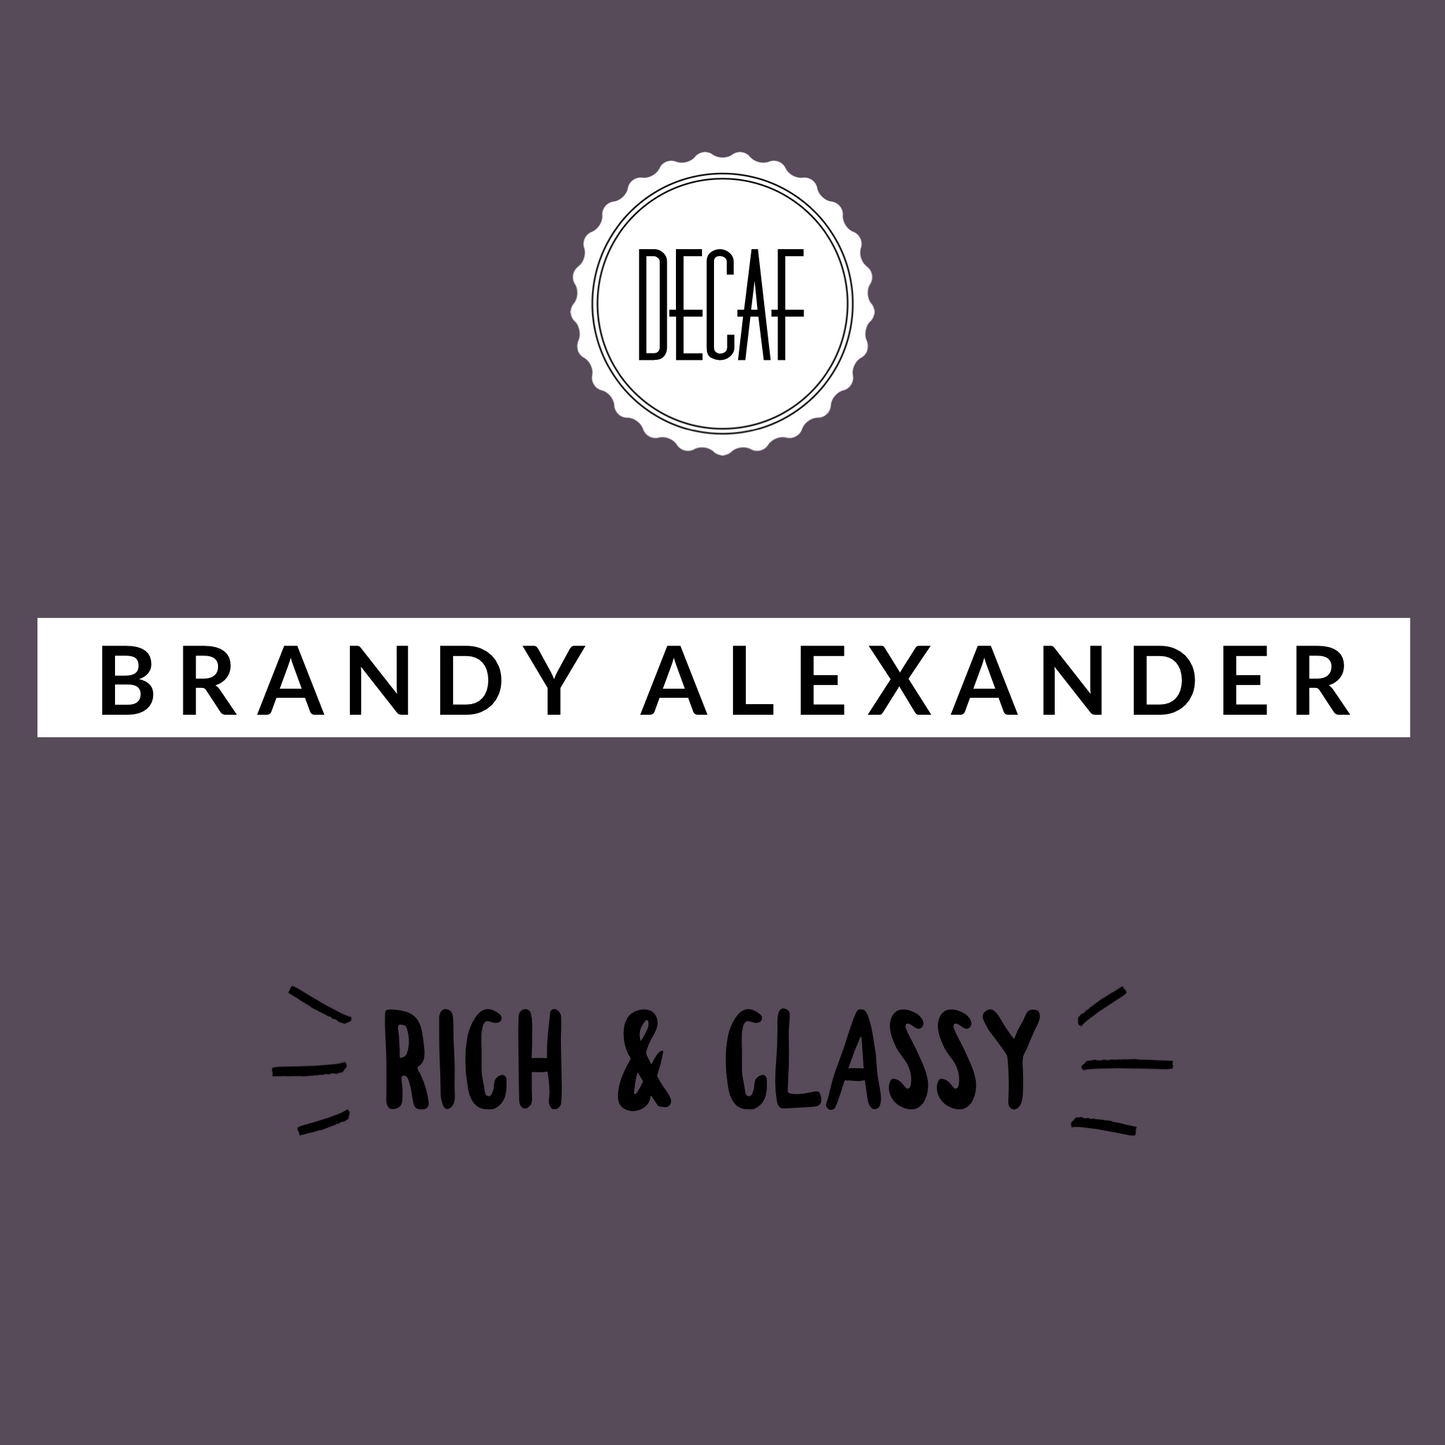 Brandy Alexander Decaf